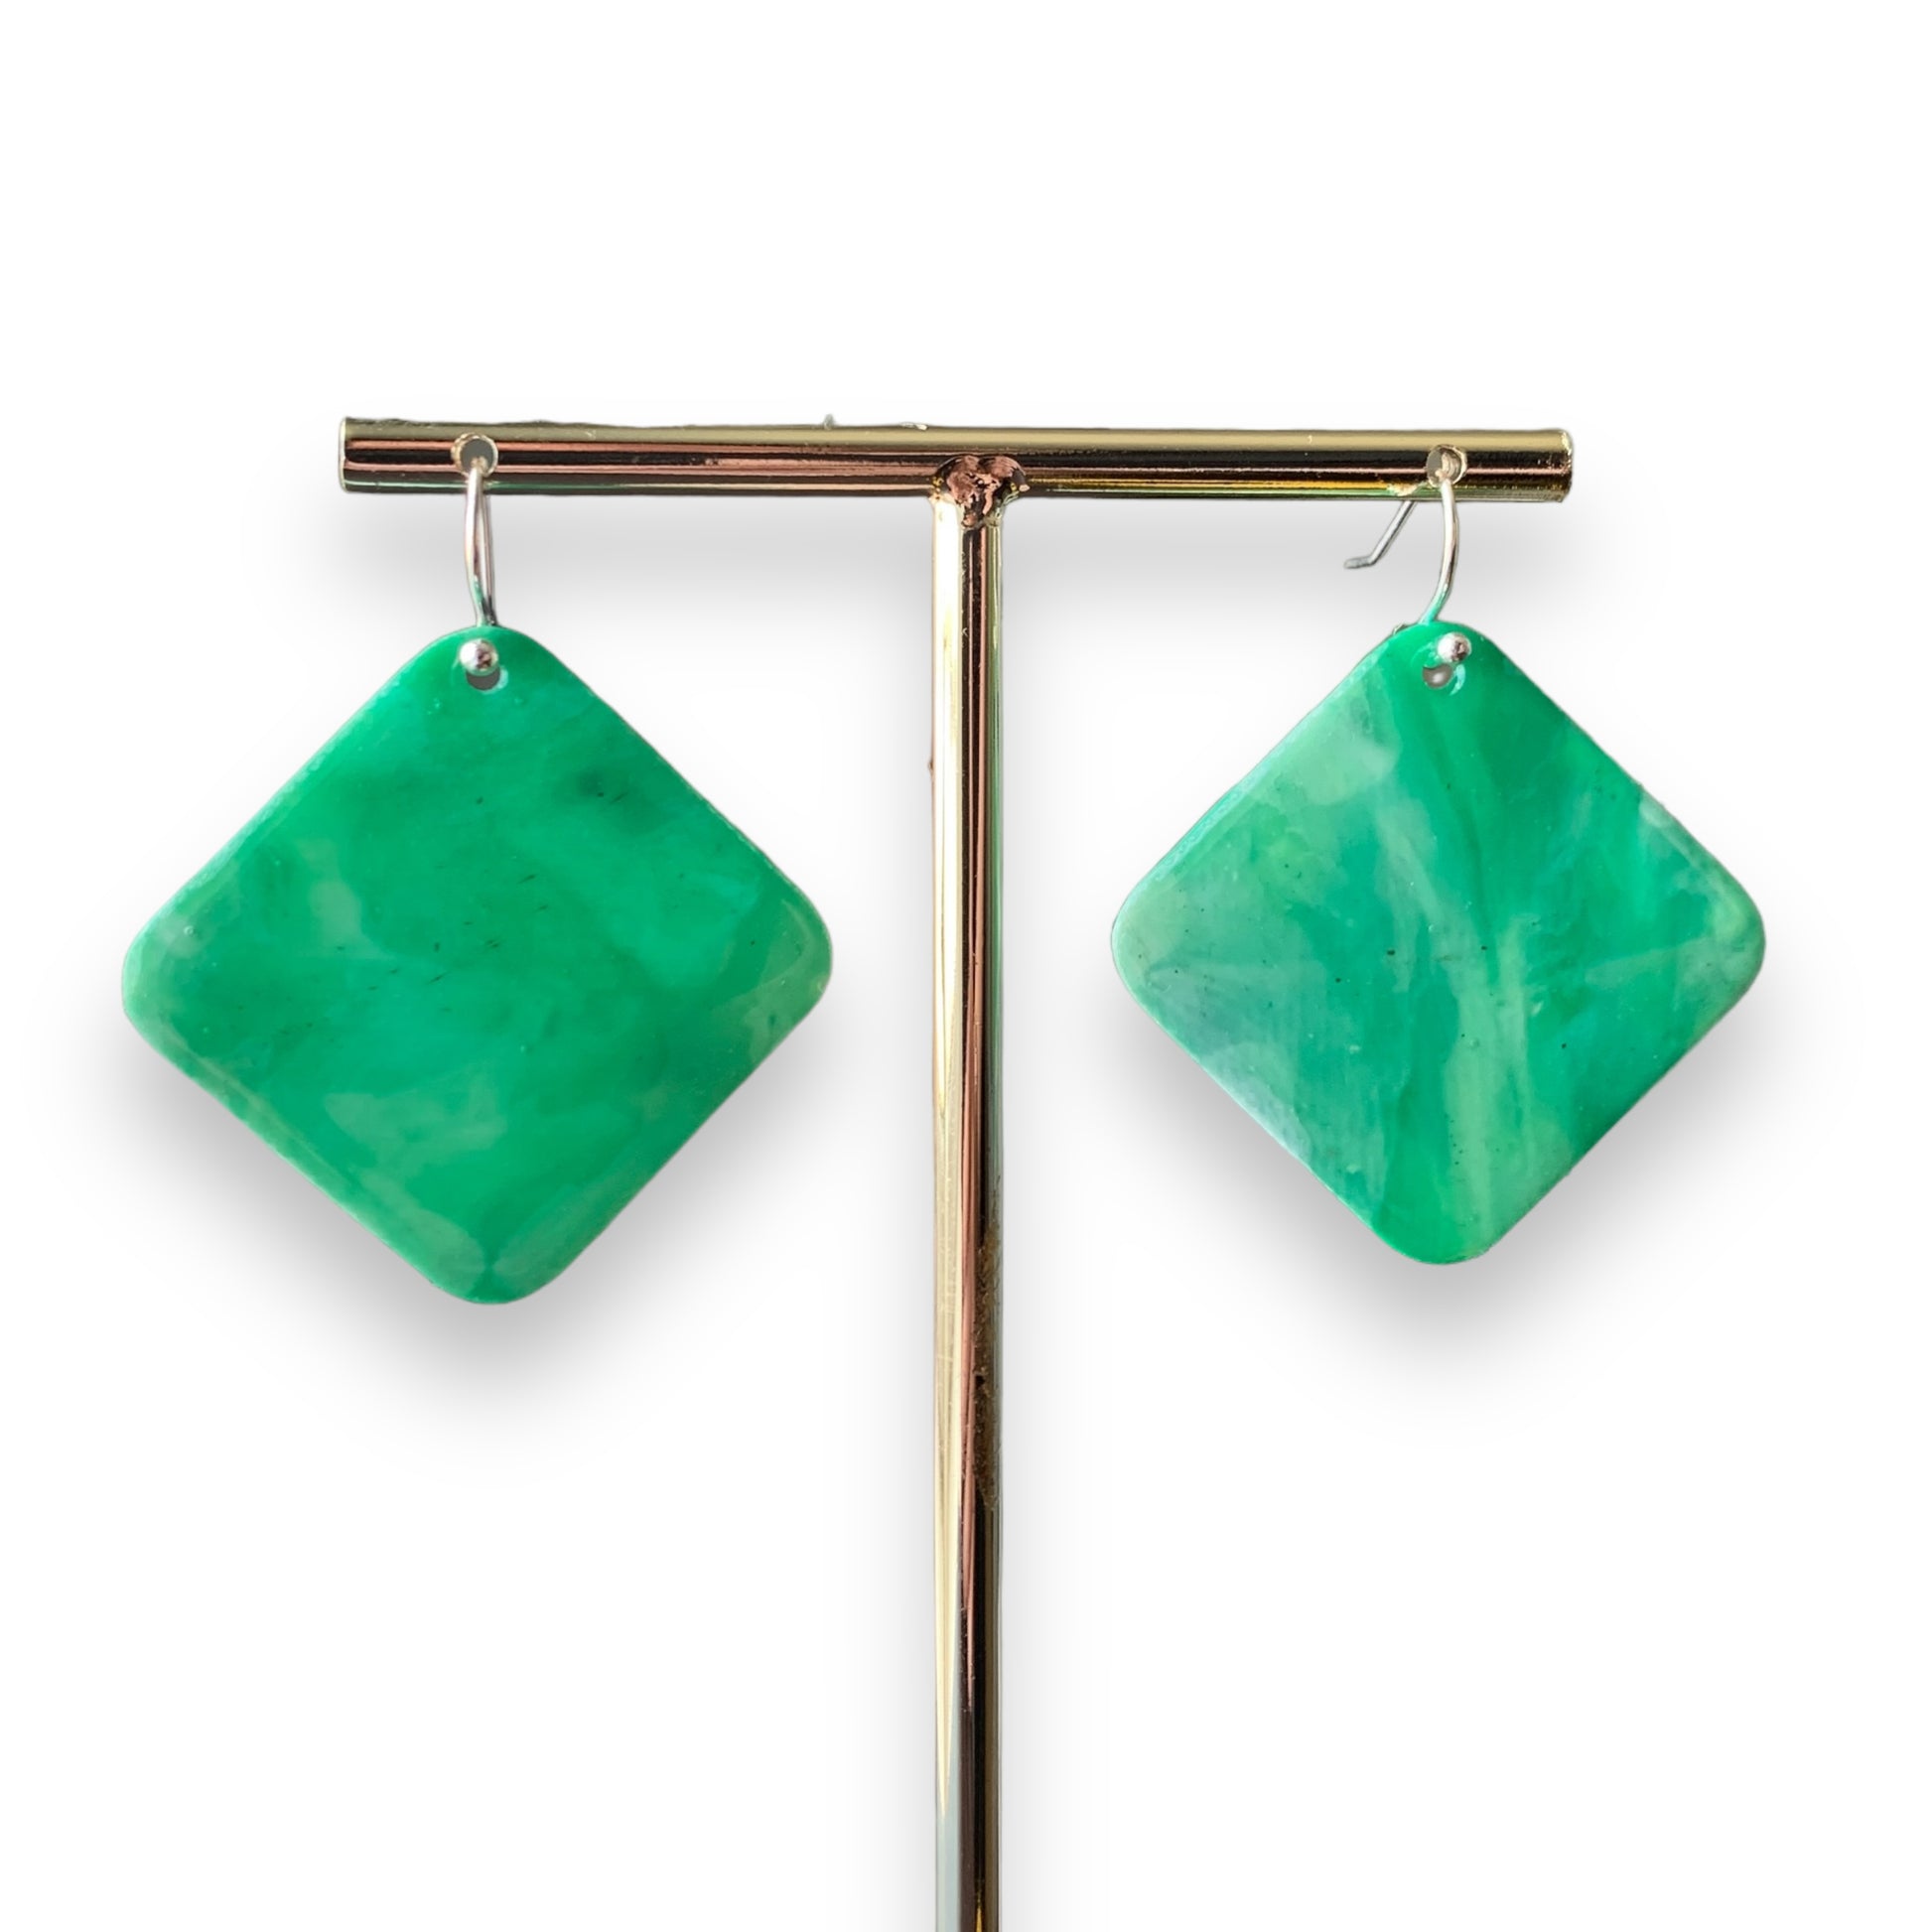 square diamond earrings dangling drop earrings handmade from recycled plastic silver light green artesian eco friendly crocuses